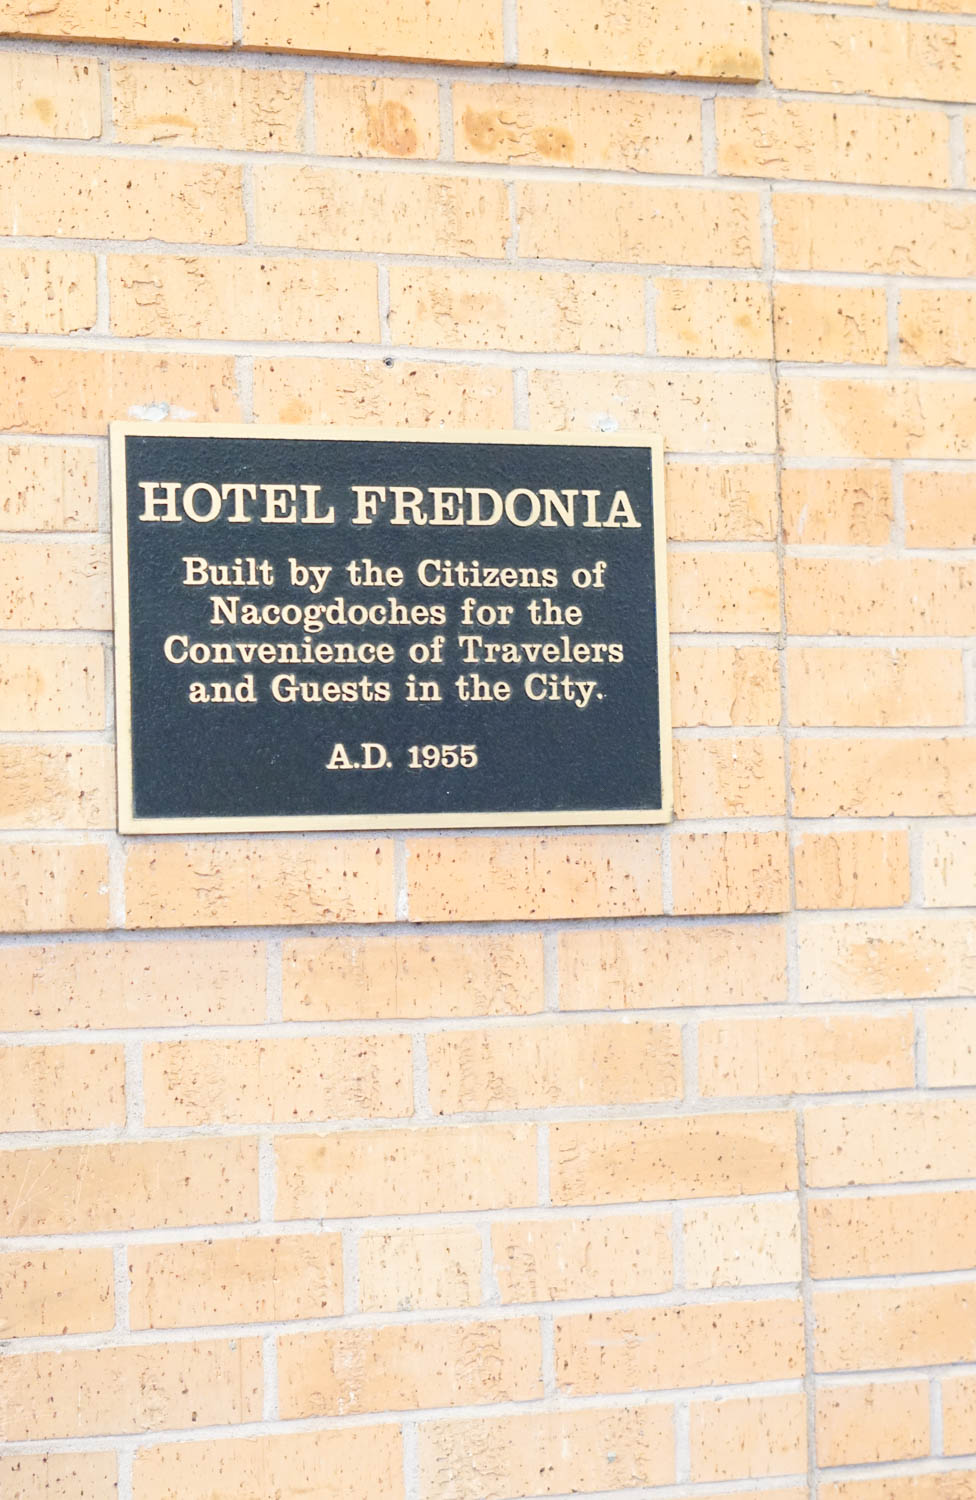 Fredonia Hotel